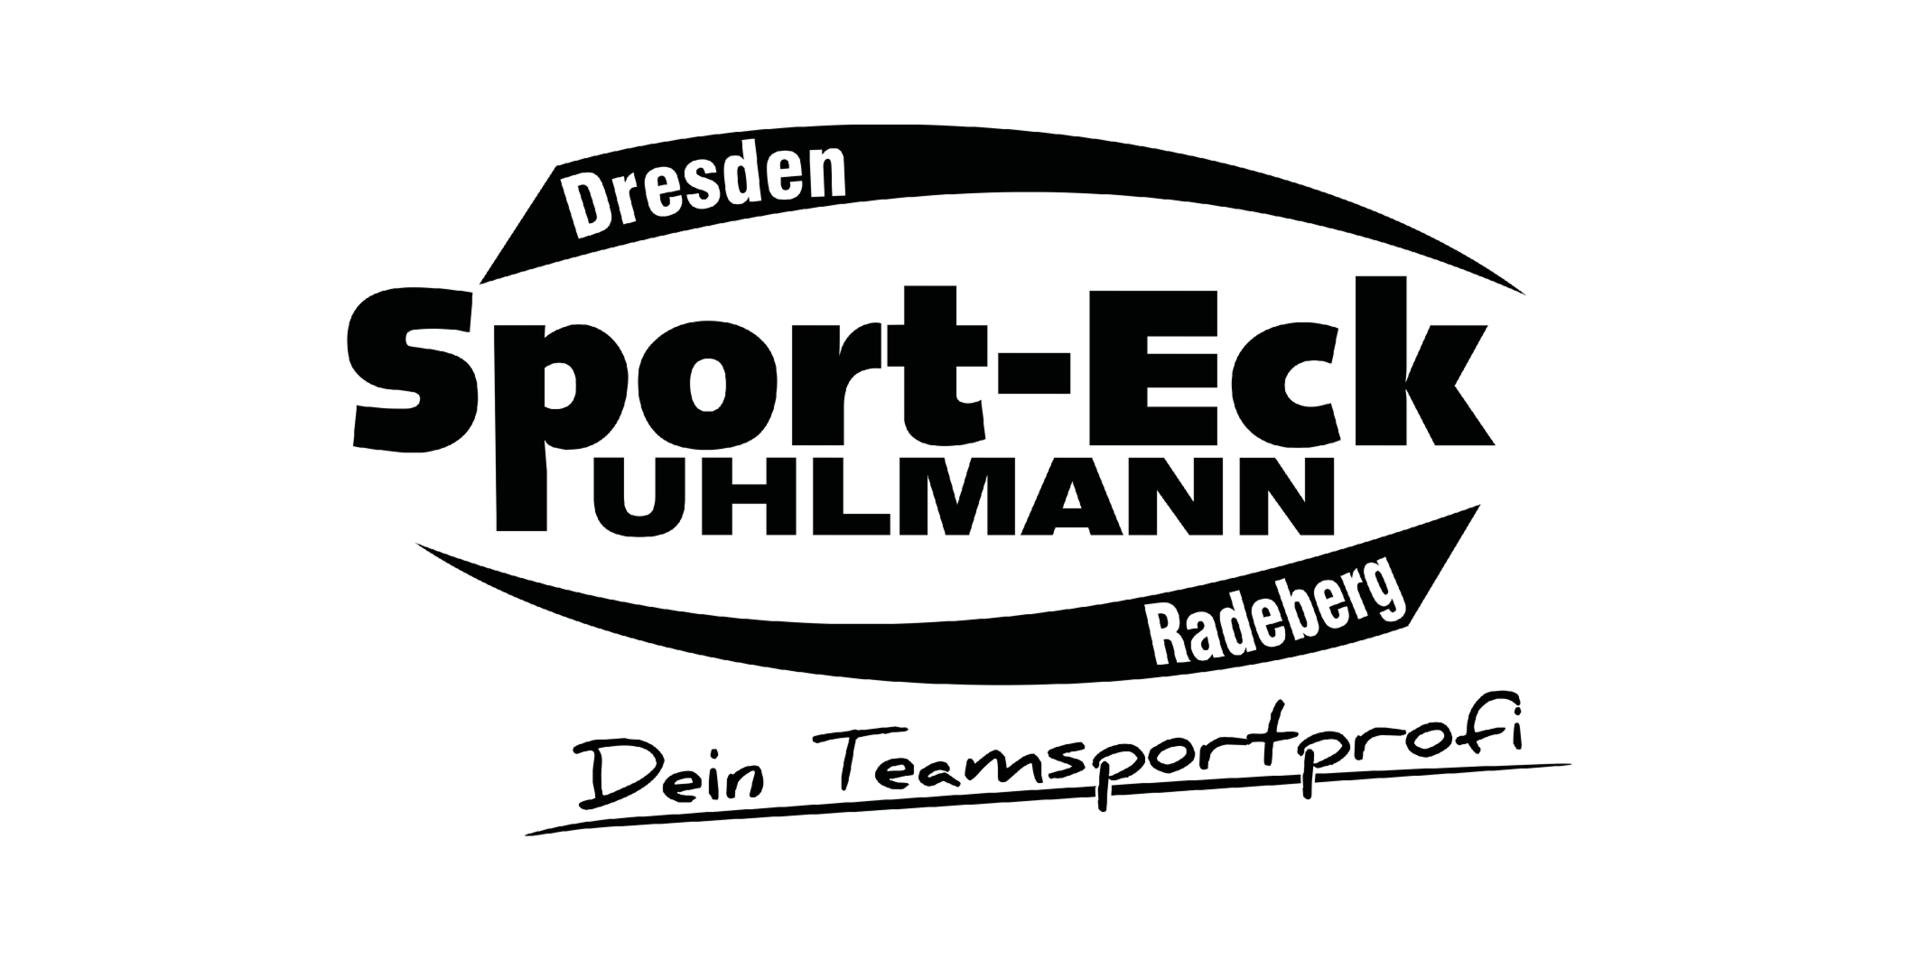 Sporteck Uhlmann